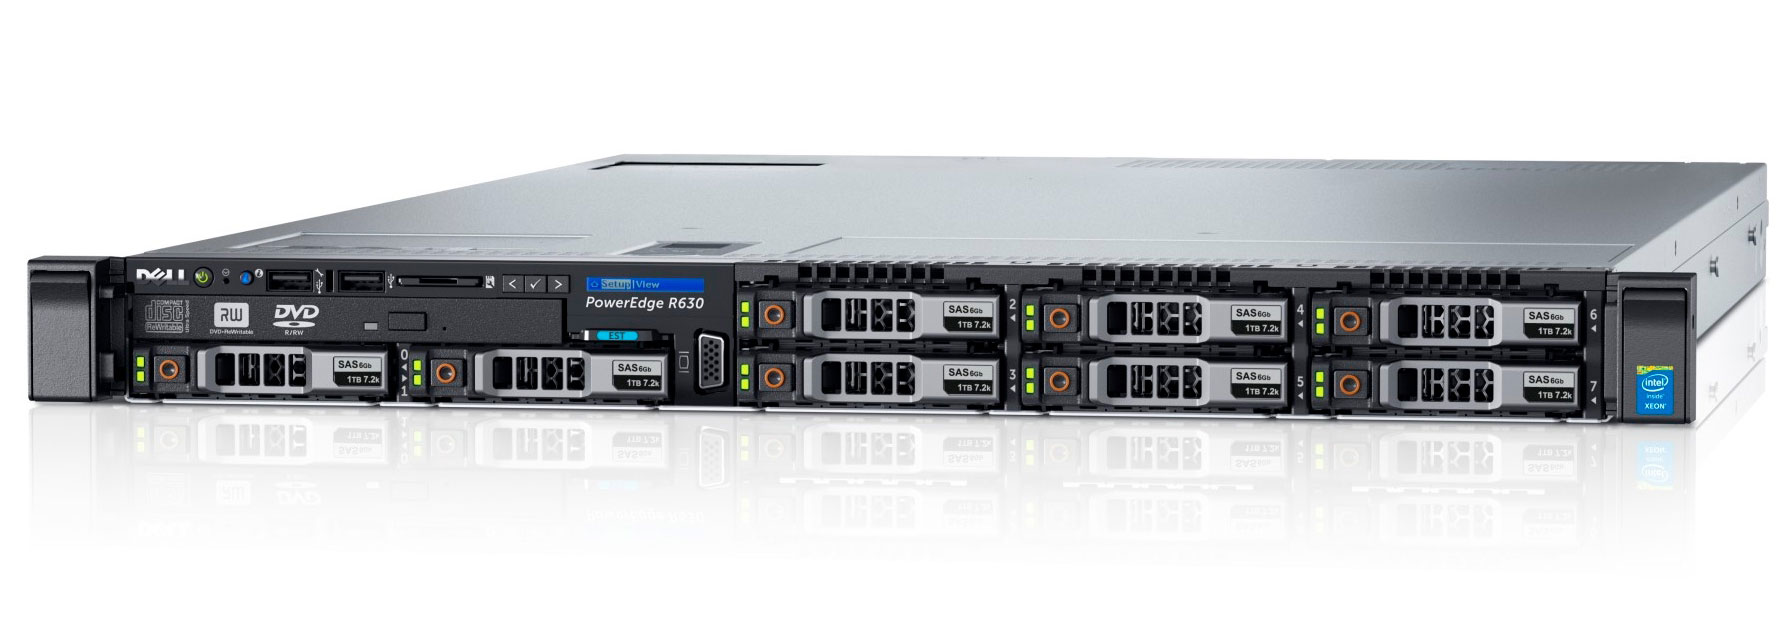 Подробное фото Сервер DELL PowerEdge R630 Xeon 2x E5-2697v3 256Gb 2133P DDR4 8x noHDD 2.5", SAS RAID Perc H730 mini, 1024Mb, DVD, 2*PSU